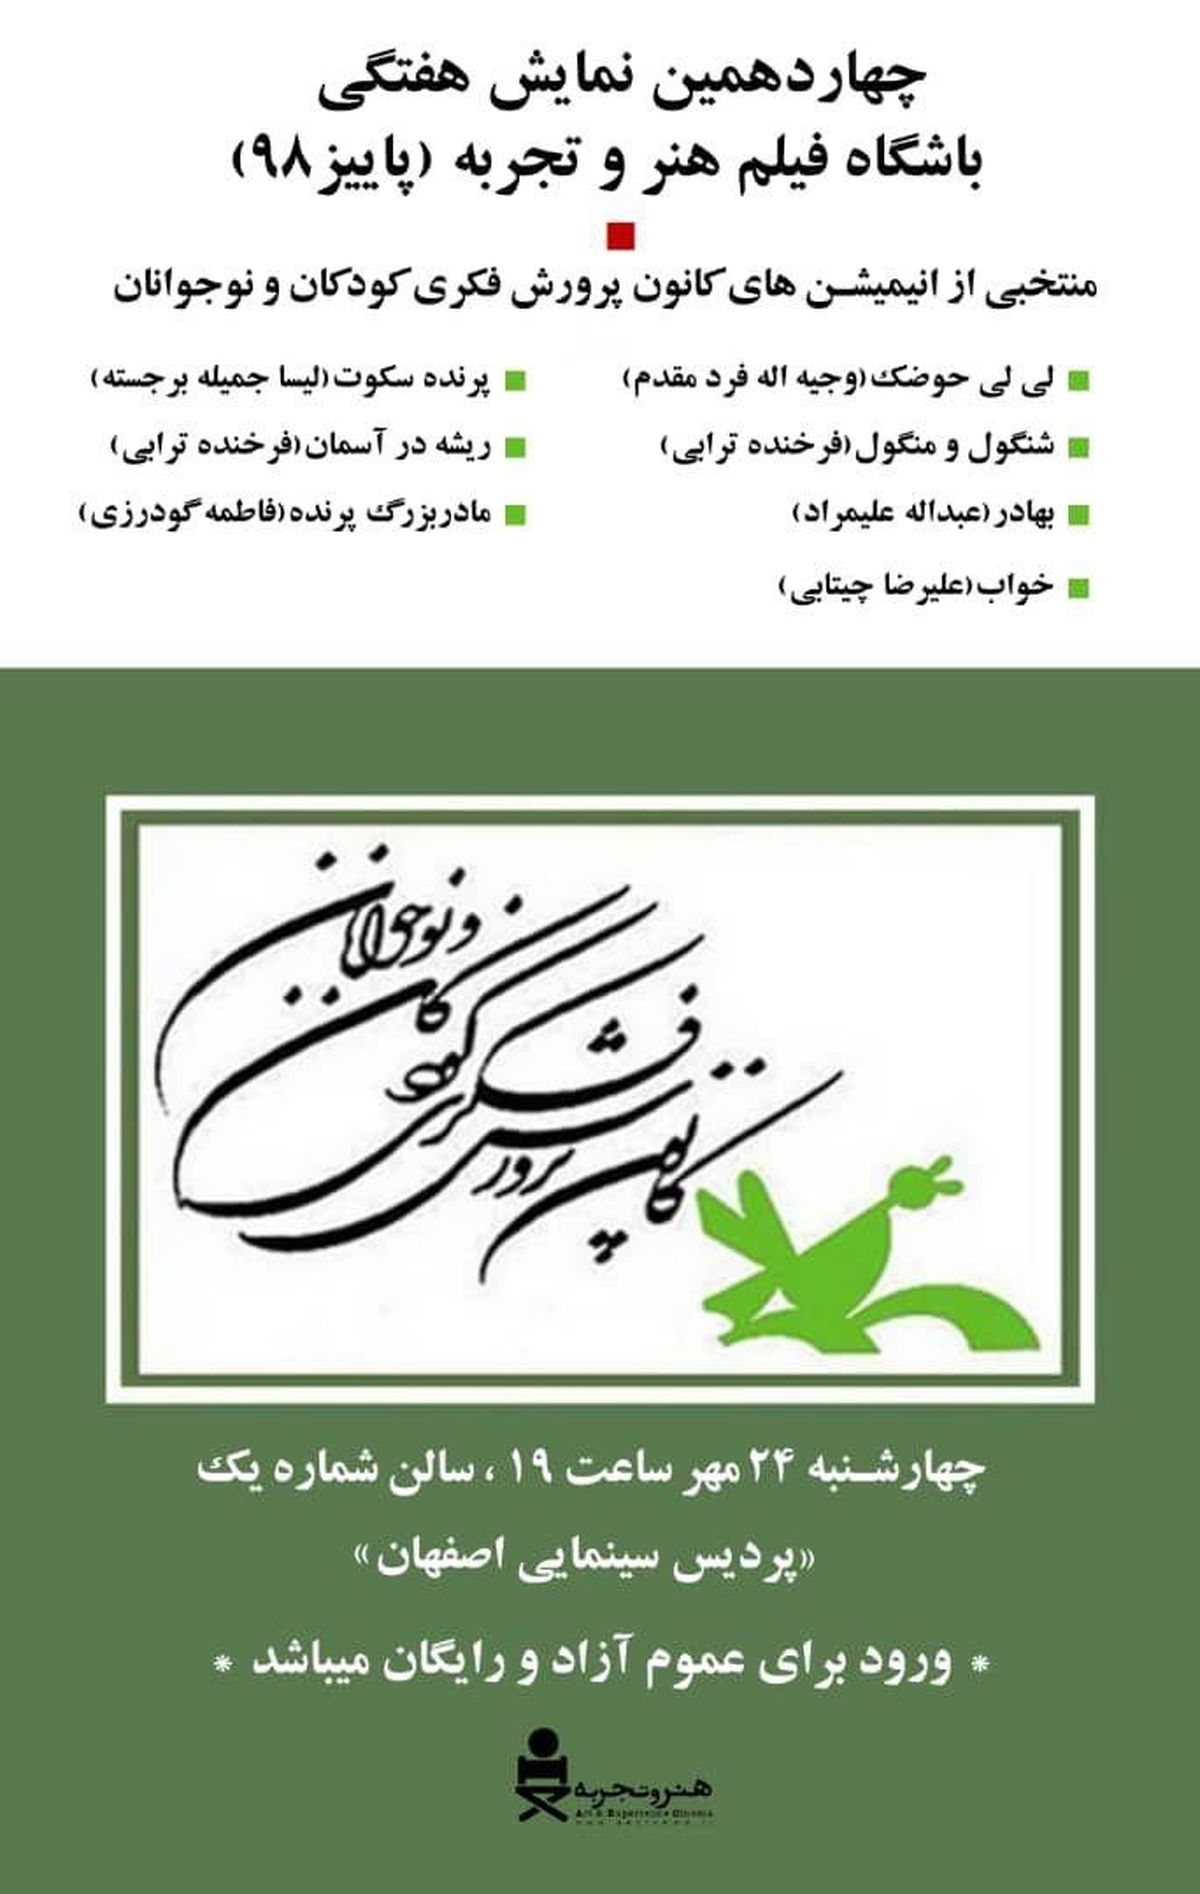 اکران ۷ پویانمایی منتخب کانون پرورش فکری کودکان، در اصفهان